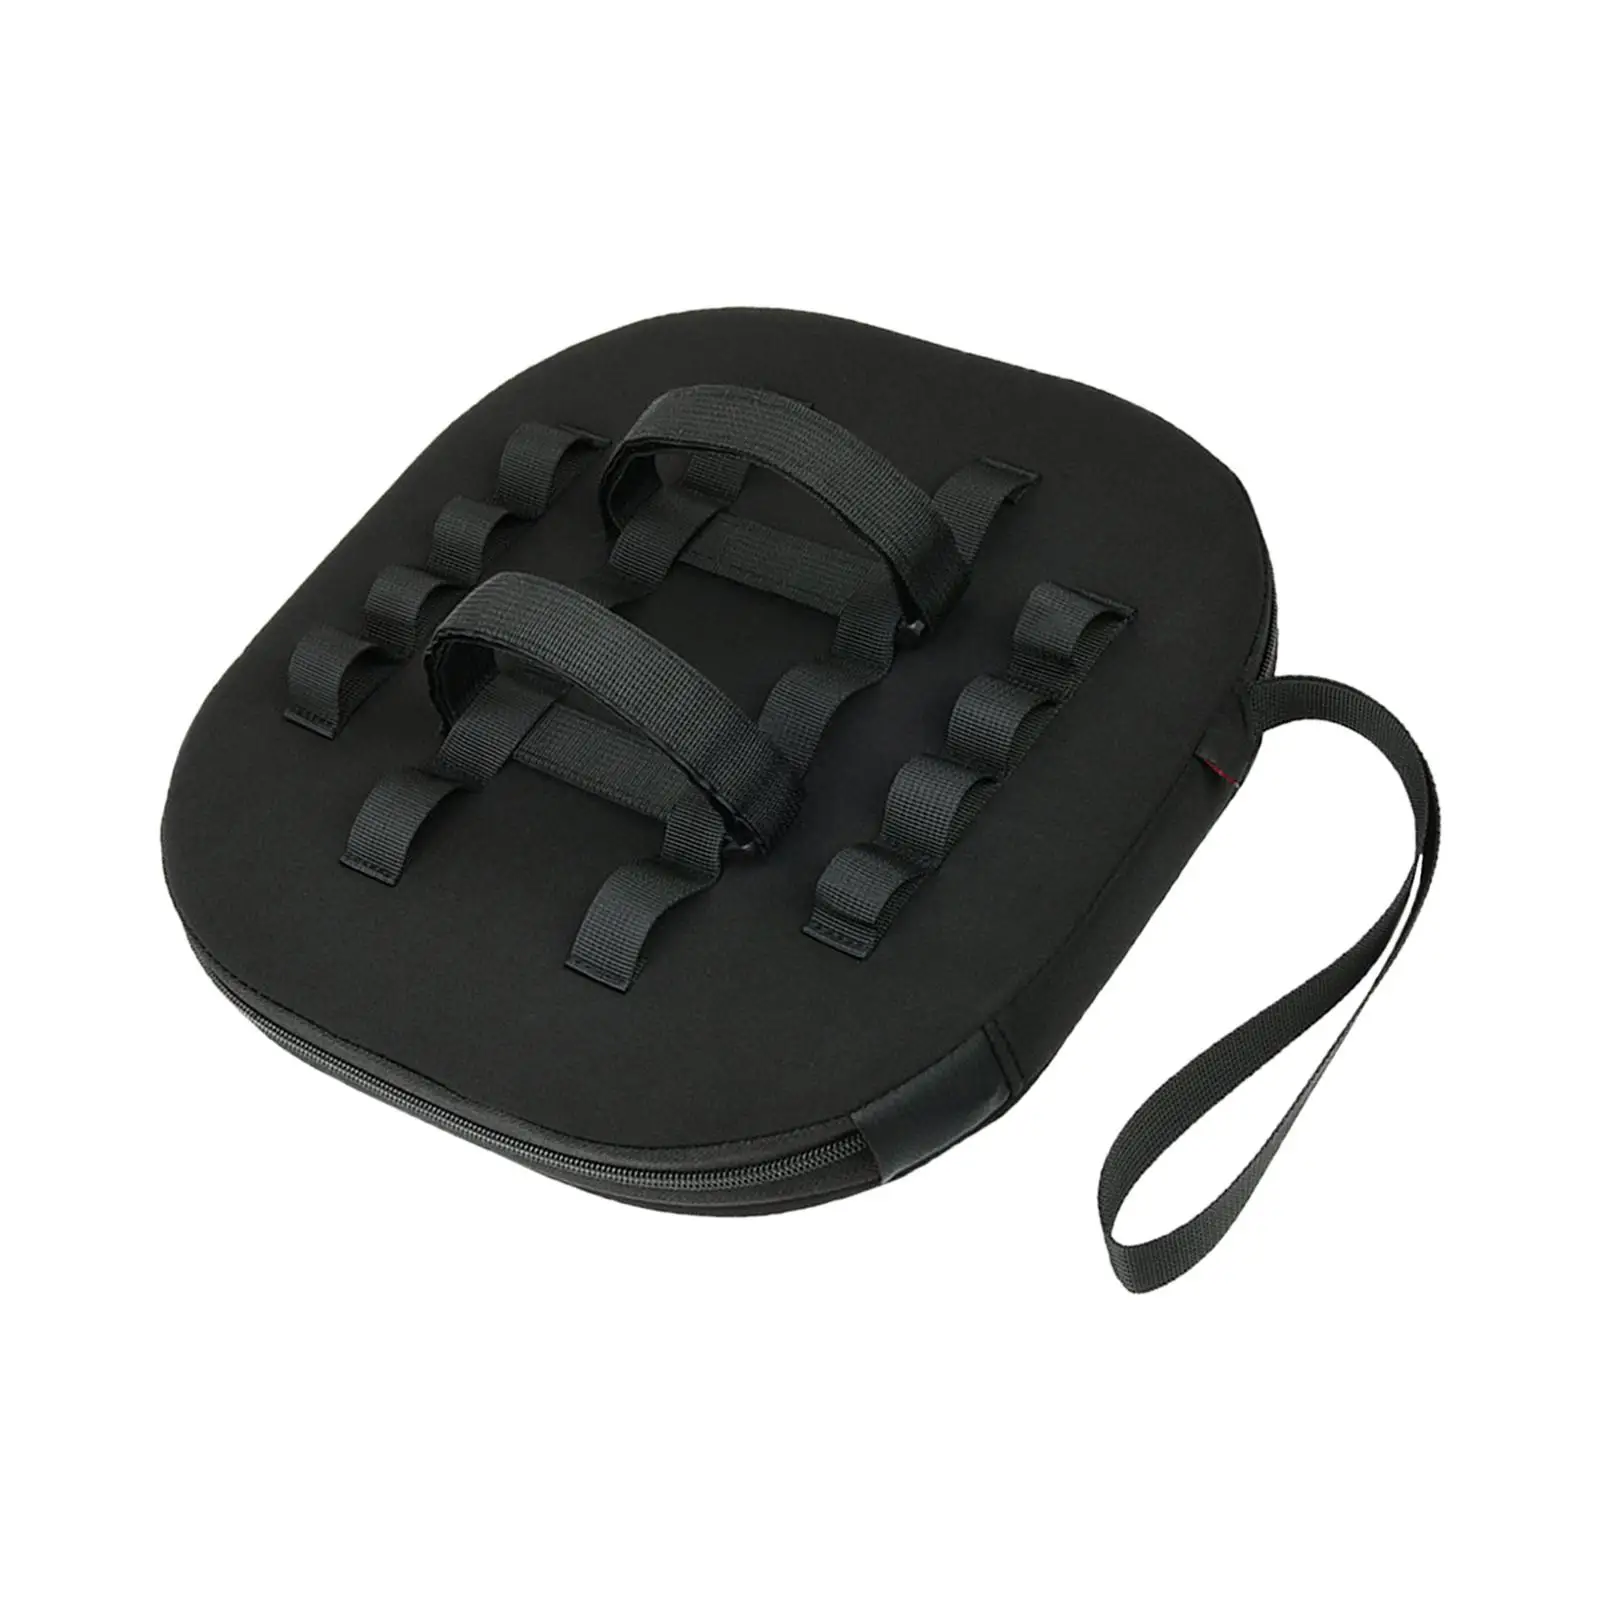 Neoprene Pool Speaker Float Accessories Cup Holder Floating Phone Holder